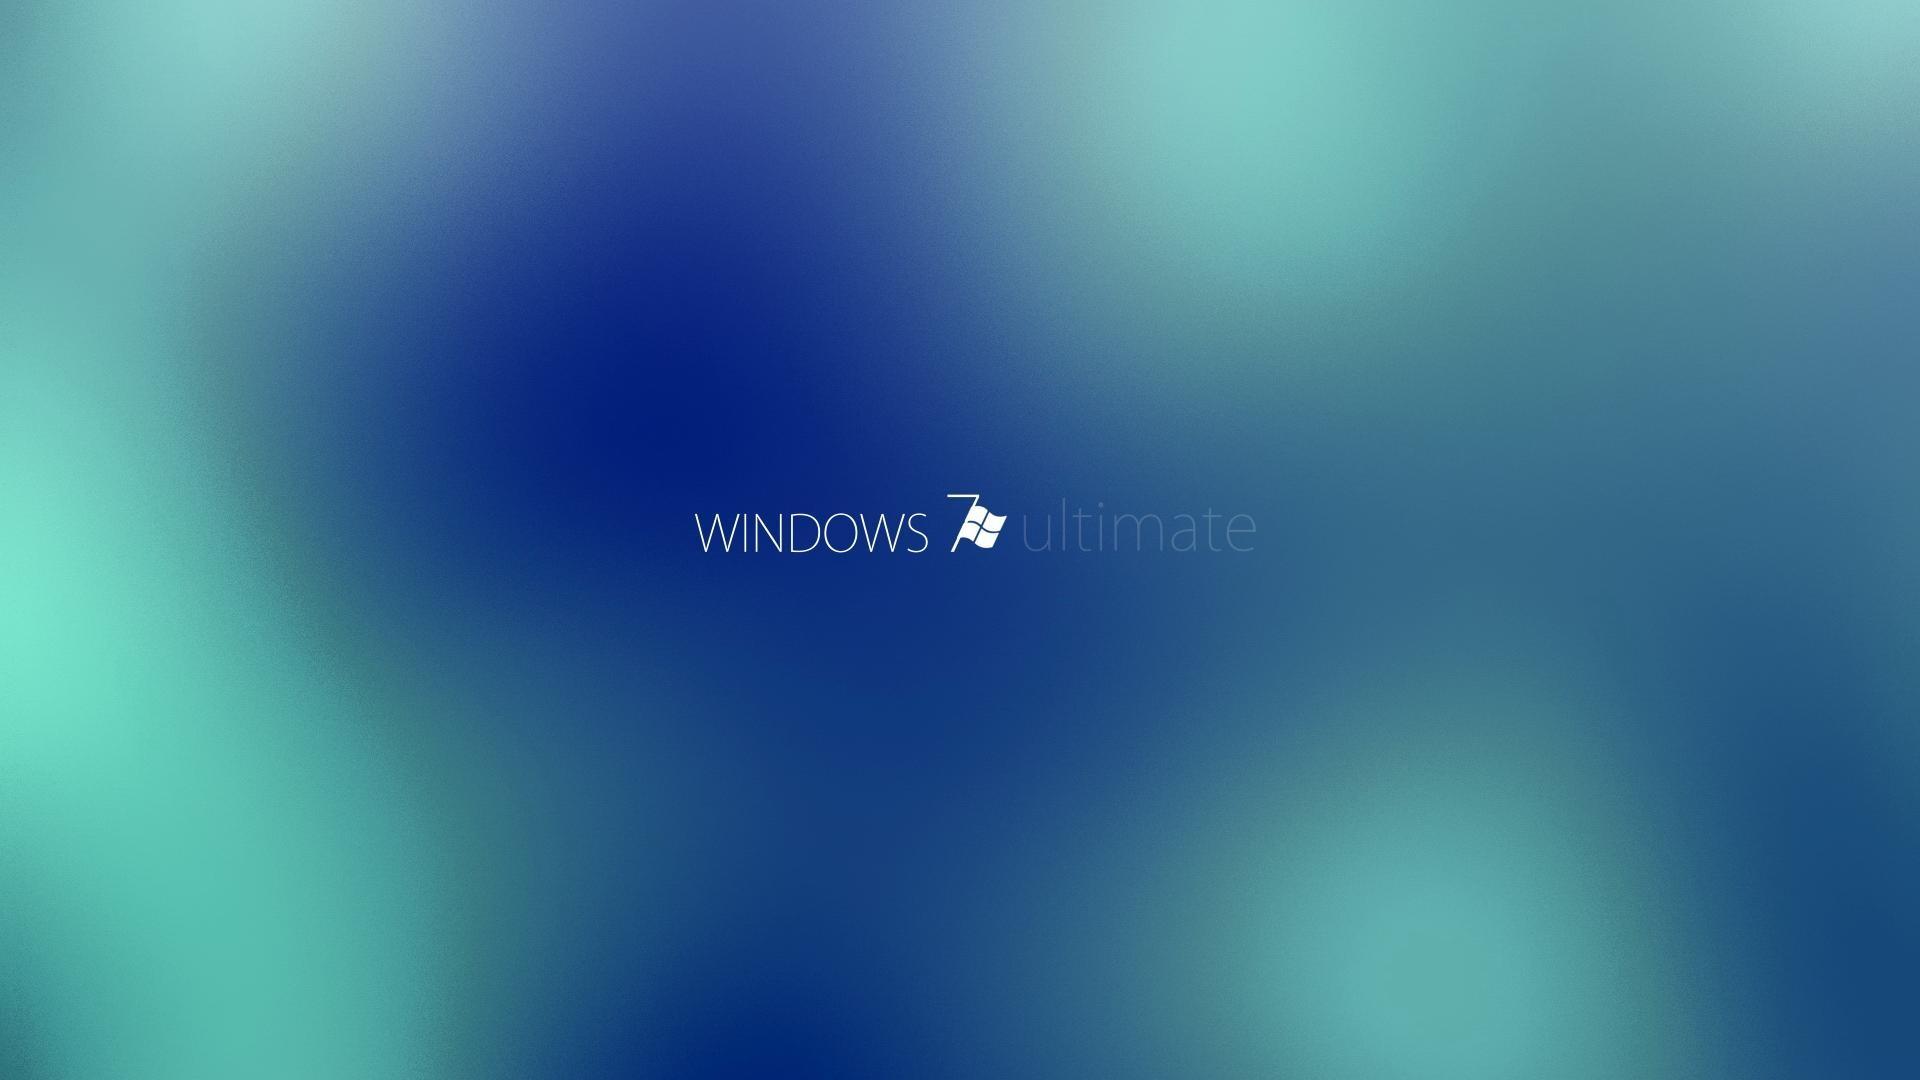 Windows 7 Ultimate Wallpaper 1280x800